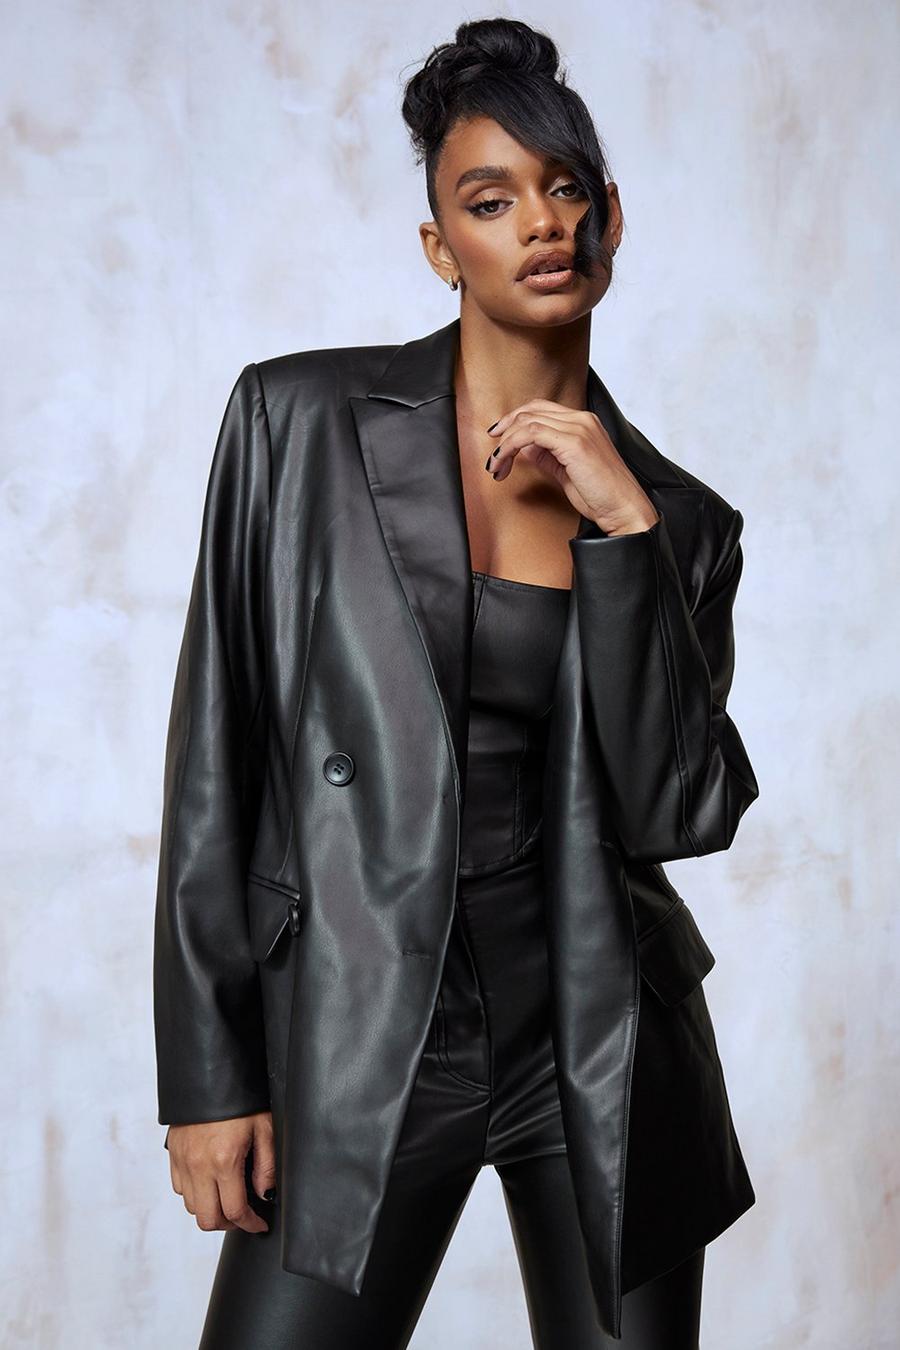 Black Kourtney Kardashian Barker Double Breasted Faux Leather Blazer